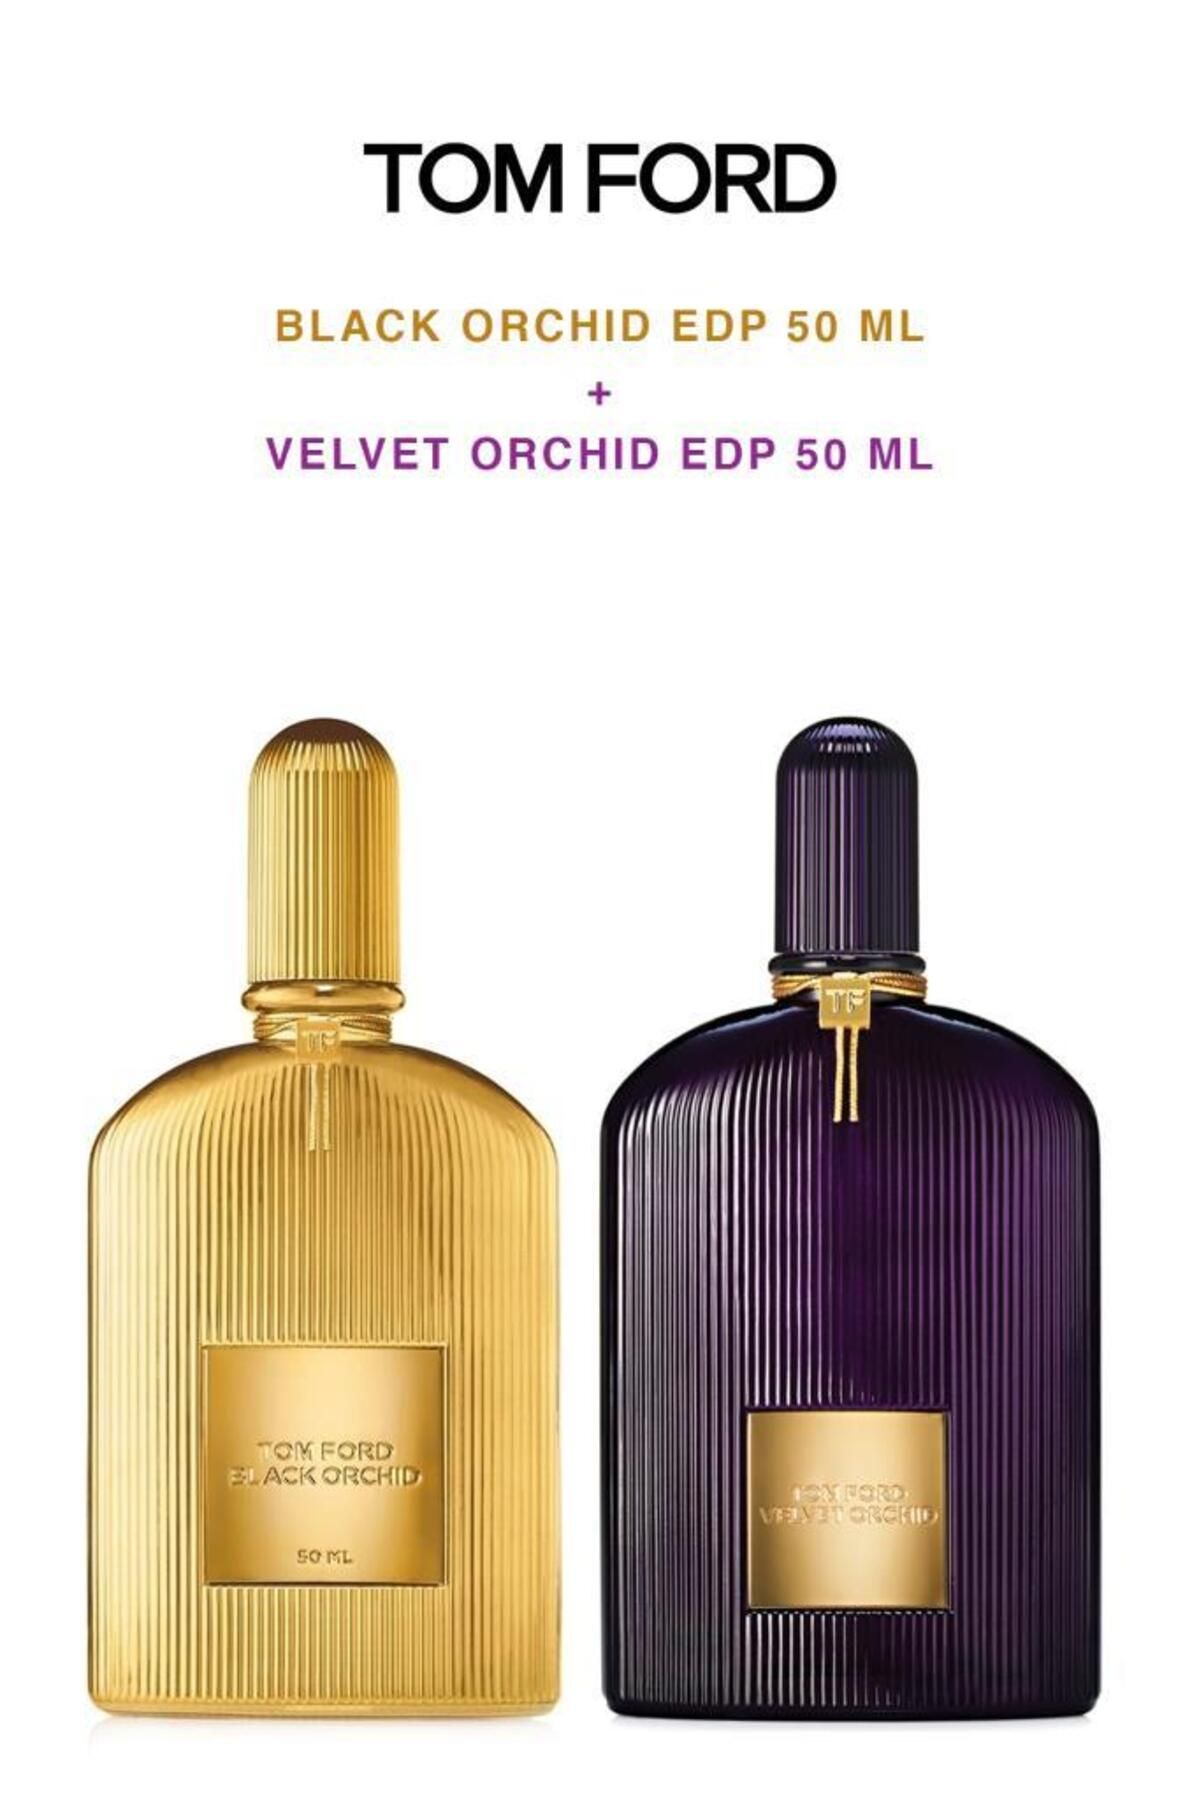 Tom Ford Black Orchid-Velvet Orchid Şık Zarif Kokusu ile Kadın-Erkek Parfüm 50ML